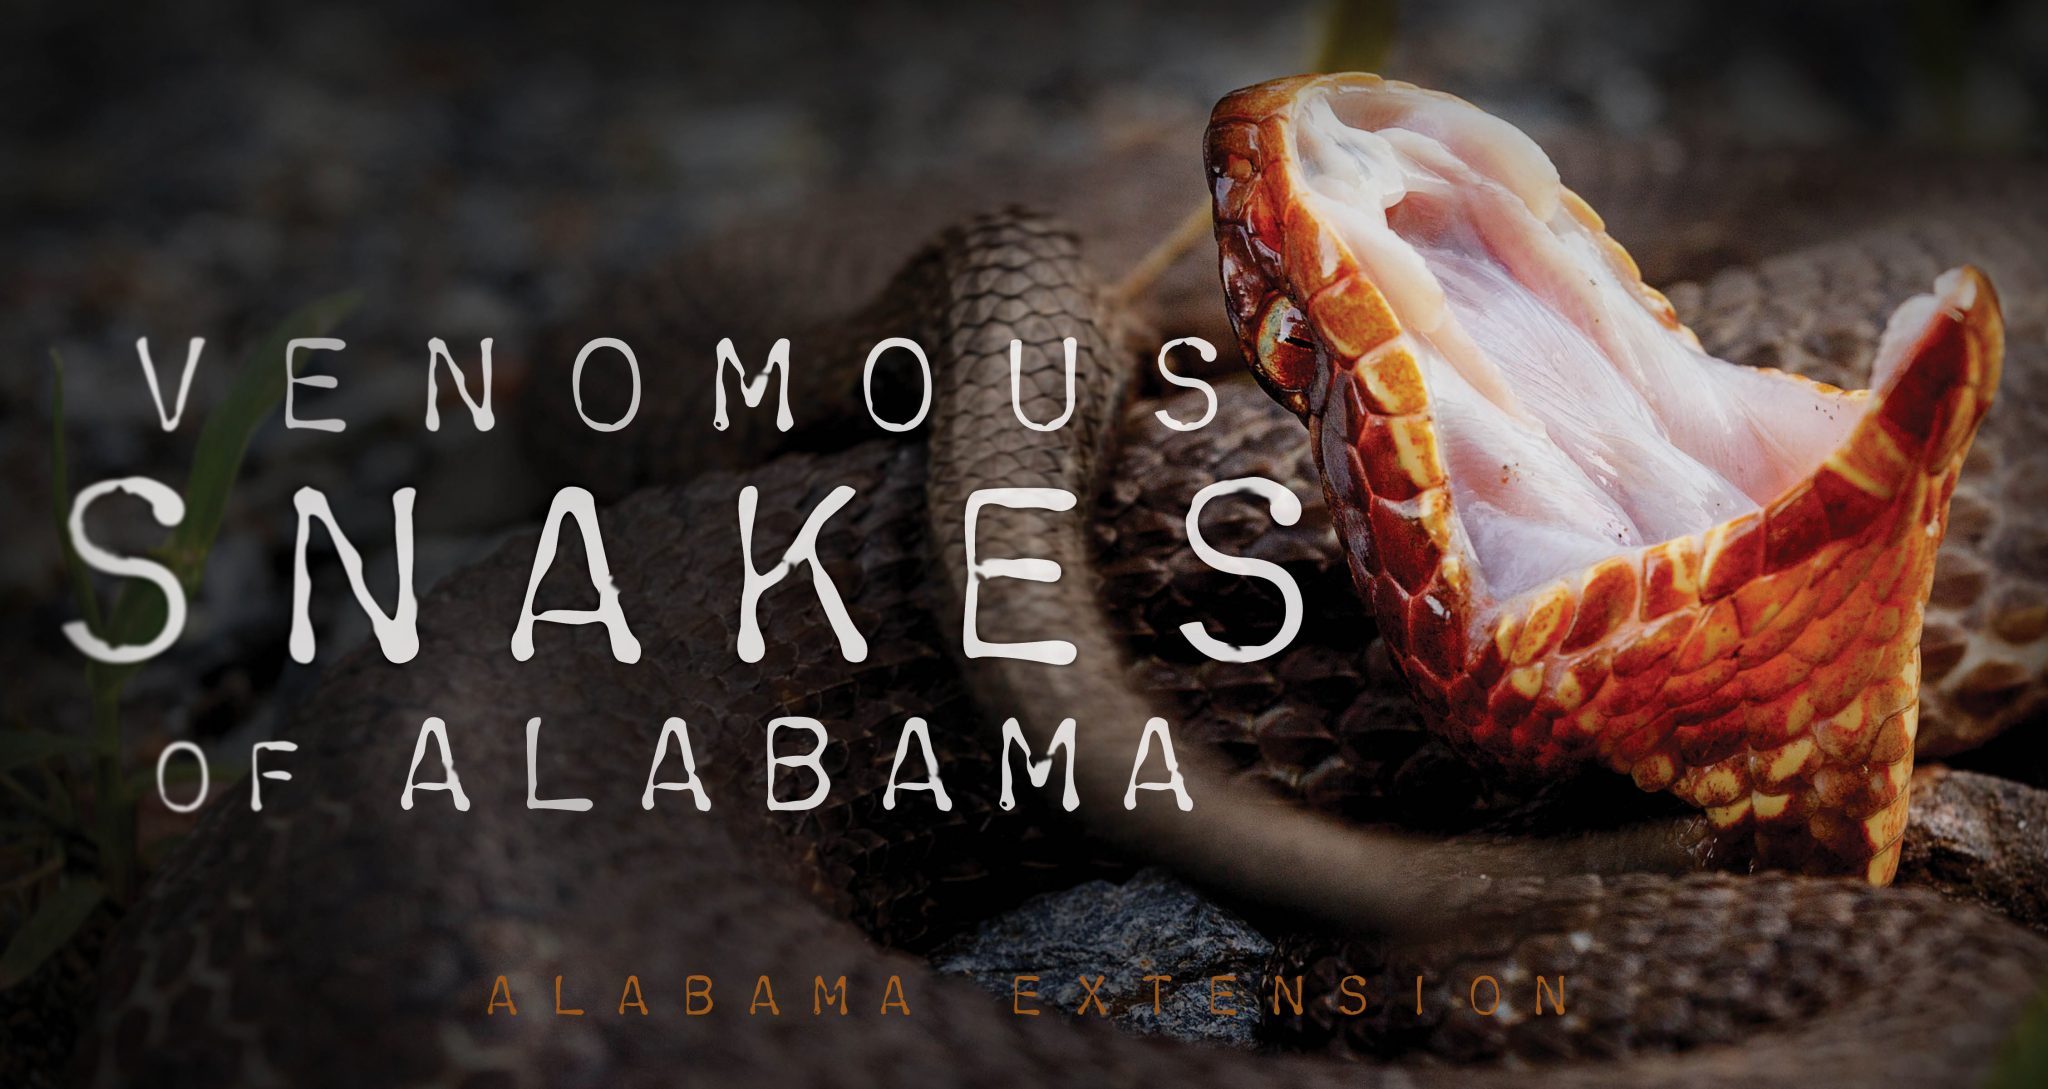 Venomous snakes of Alabama